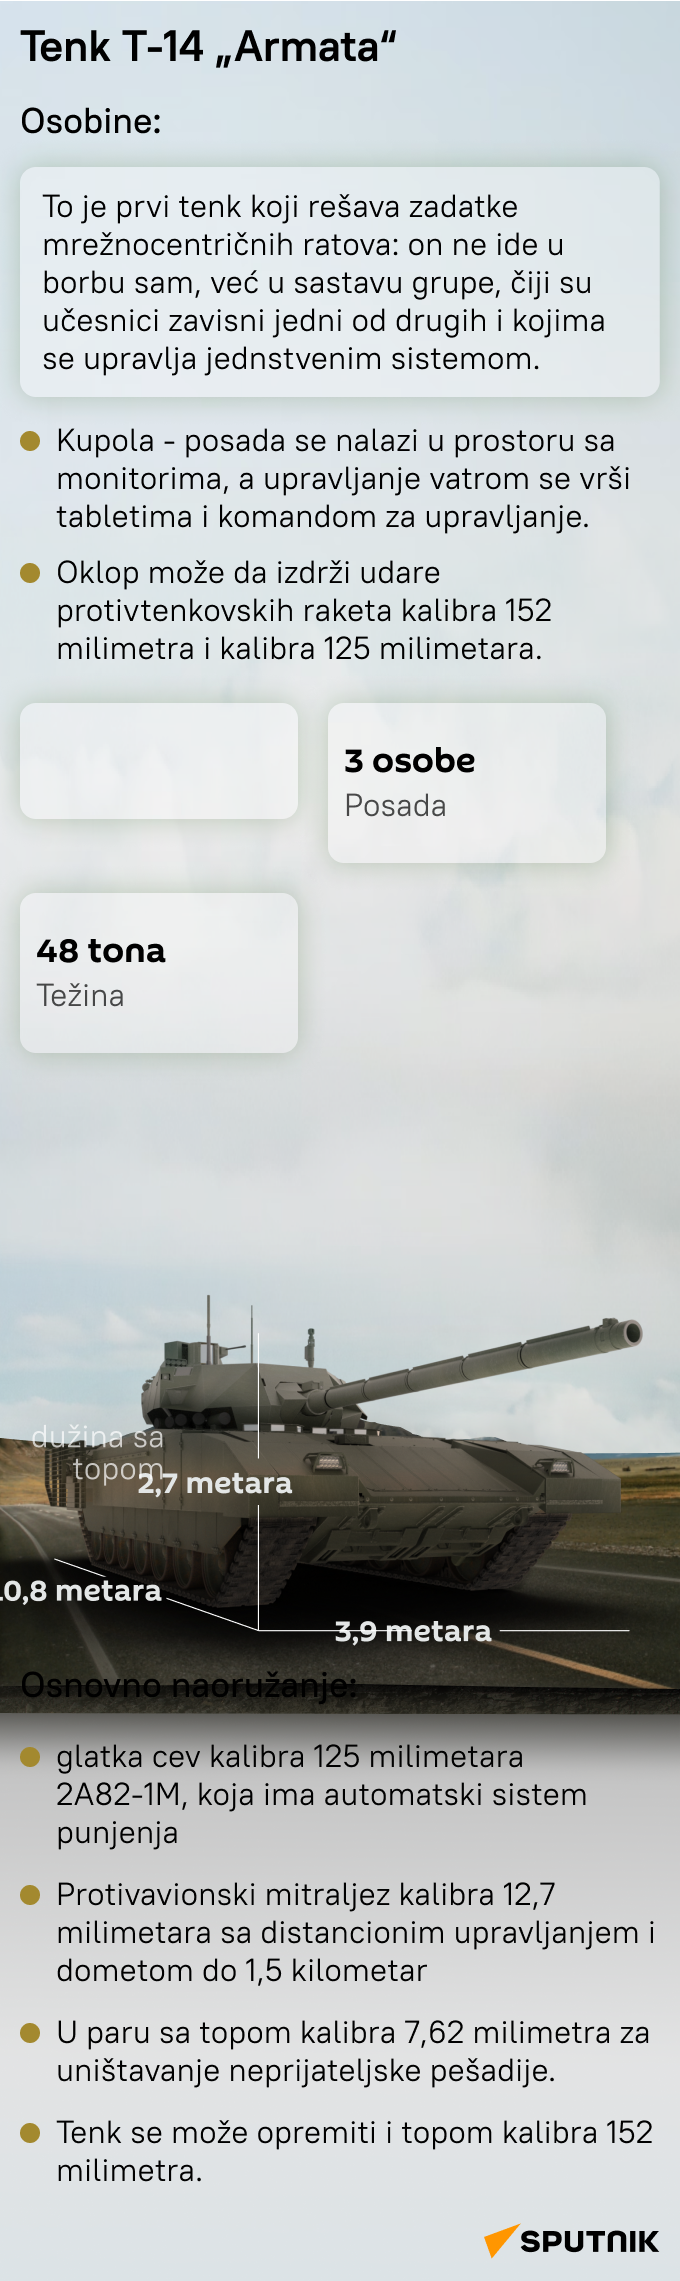 Tenk Armata - Sputnik Srbija